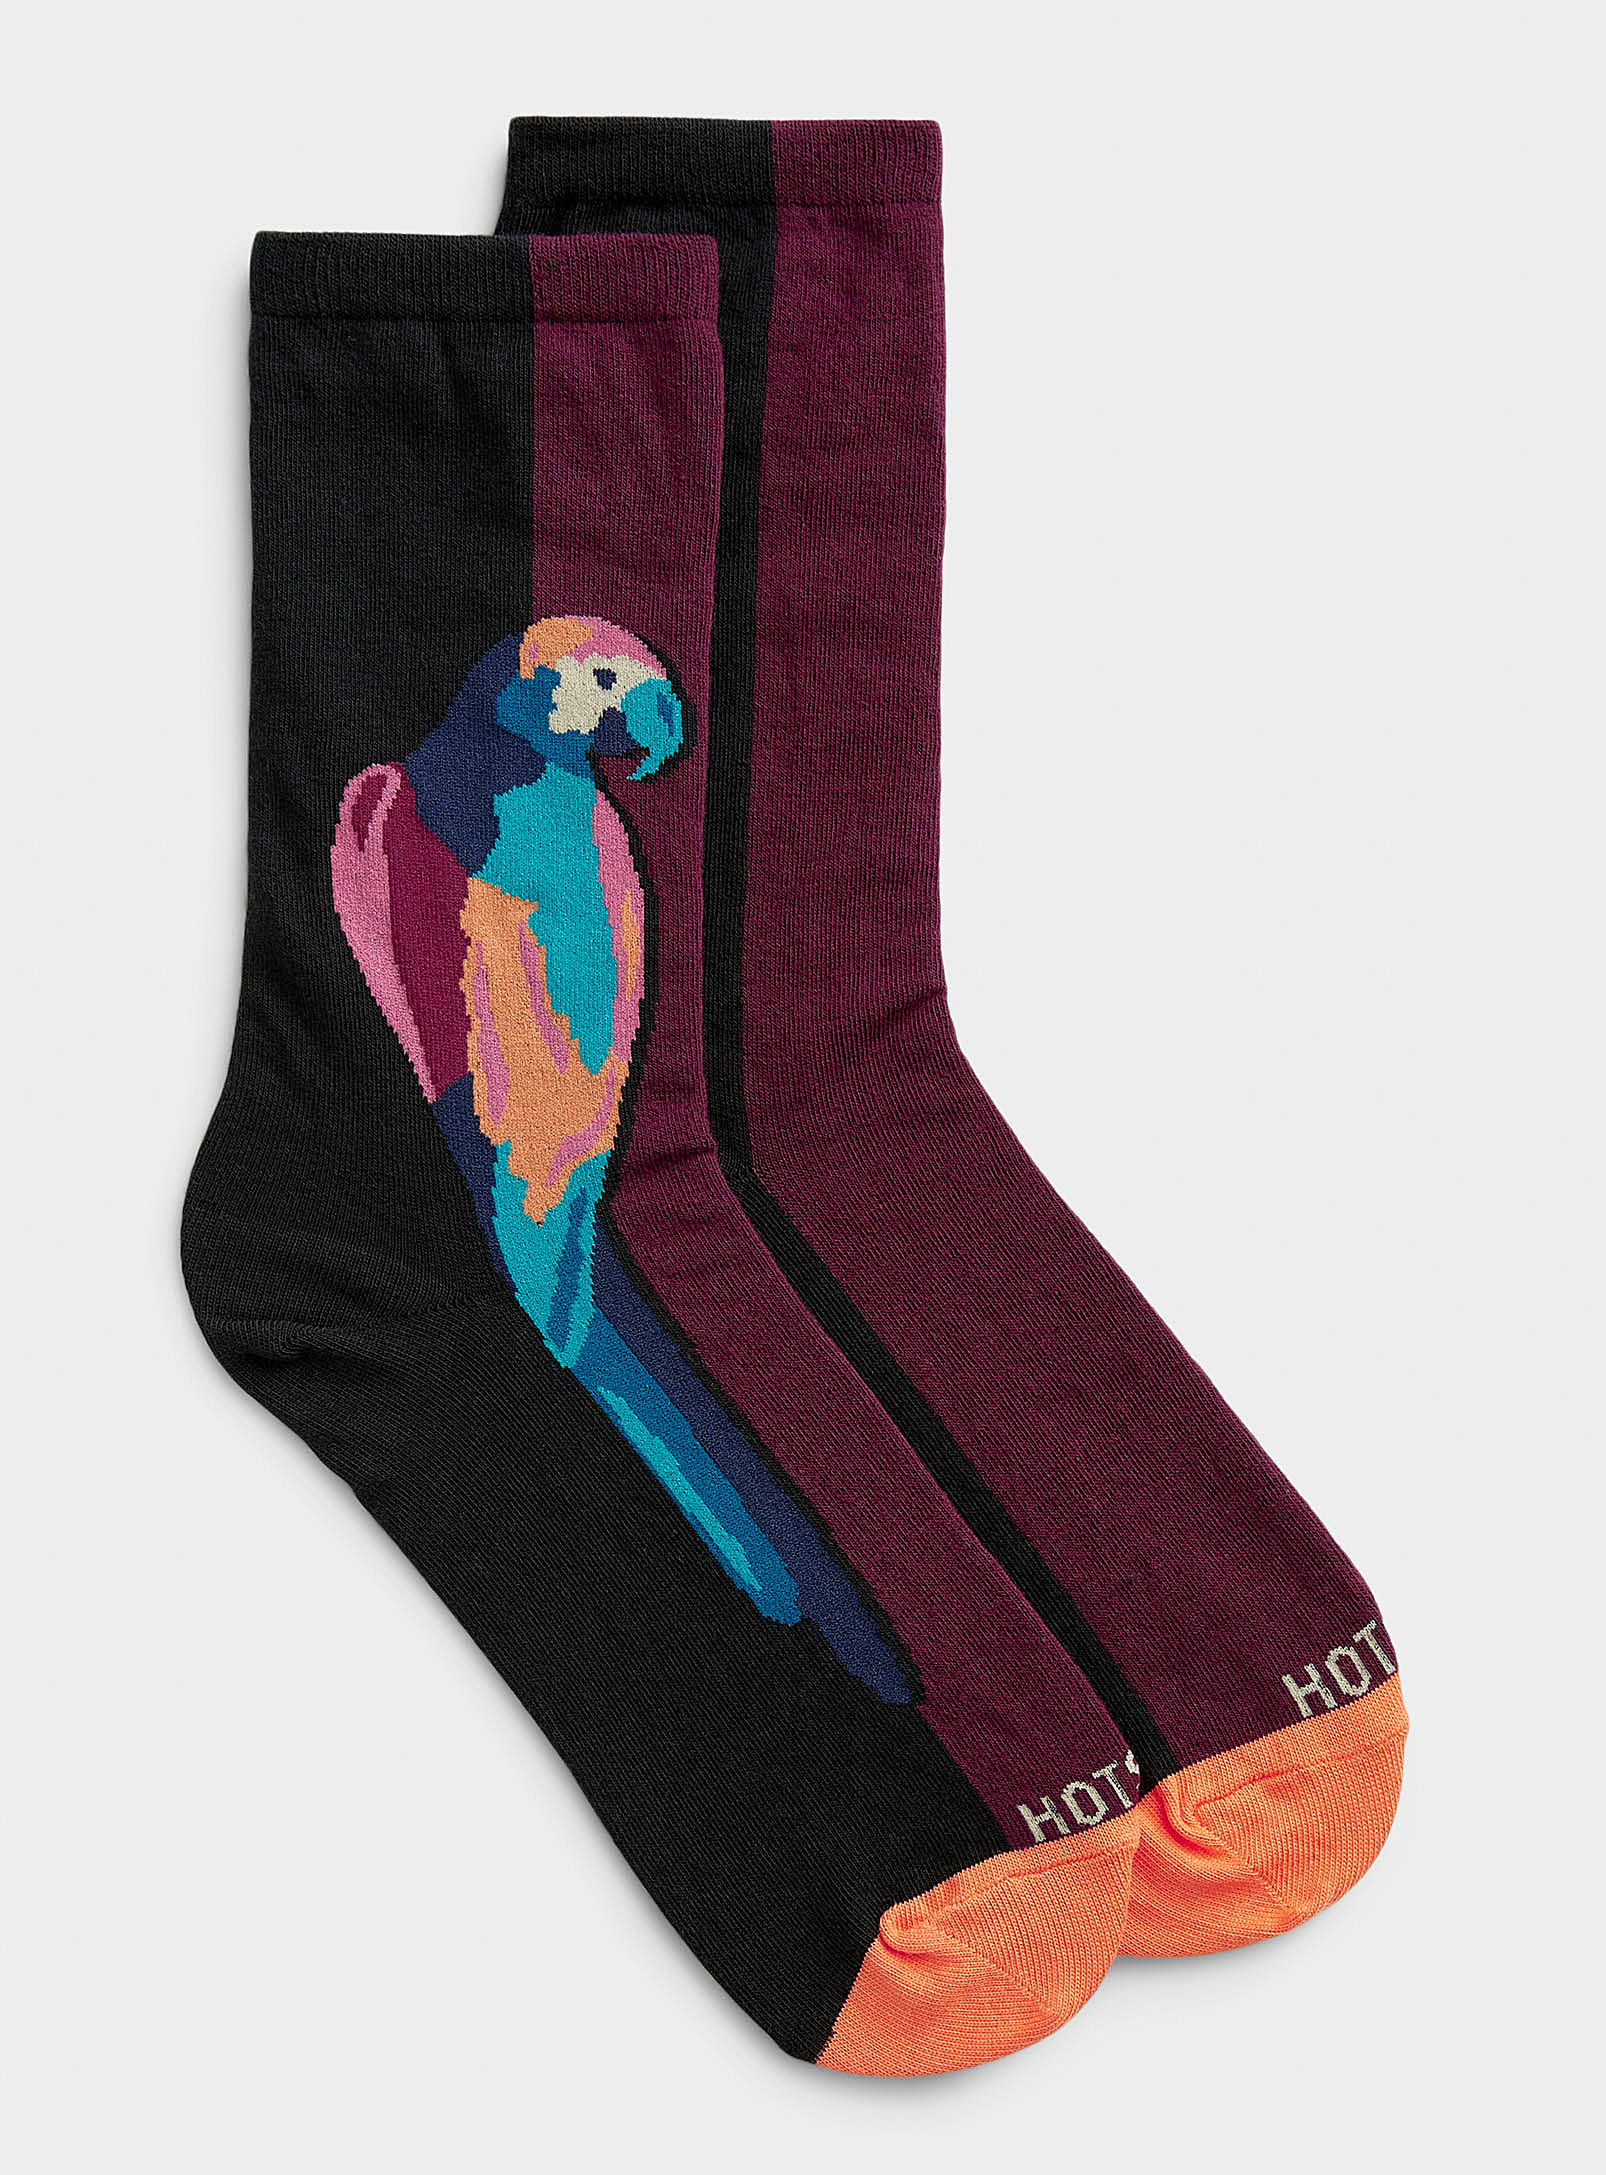 Hot Sox - Women's Parrot sock